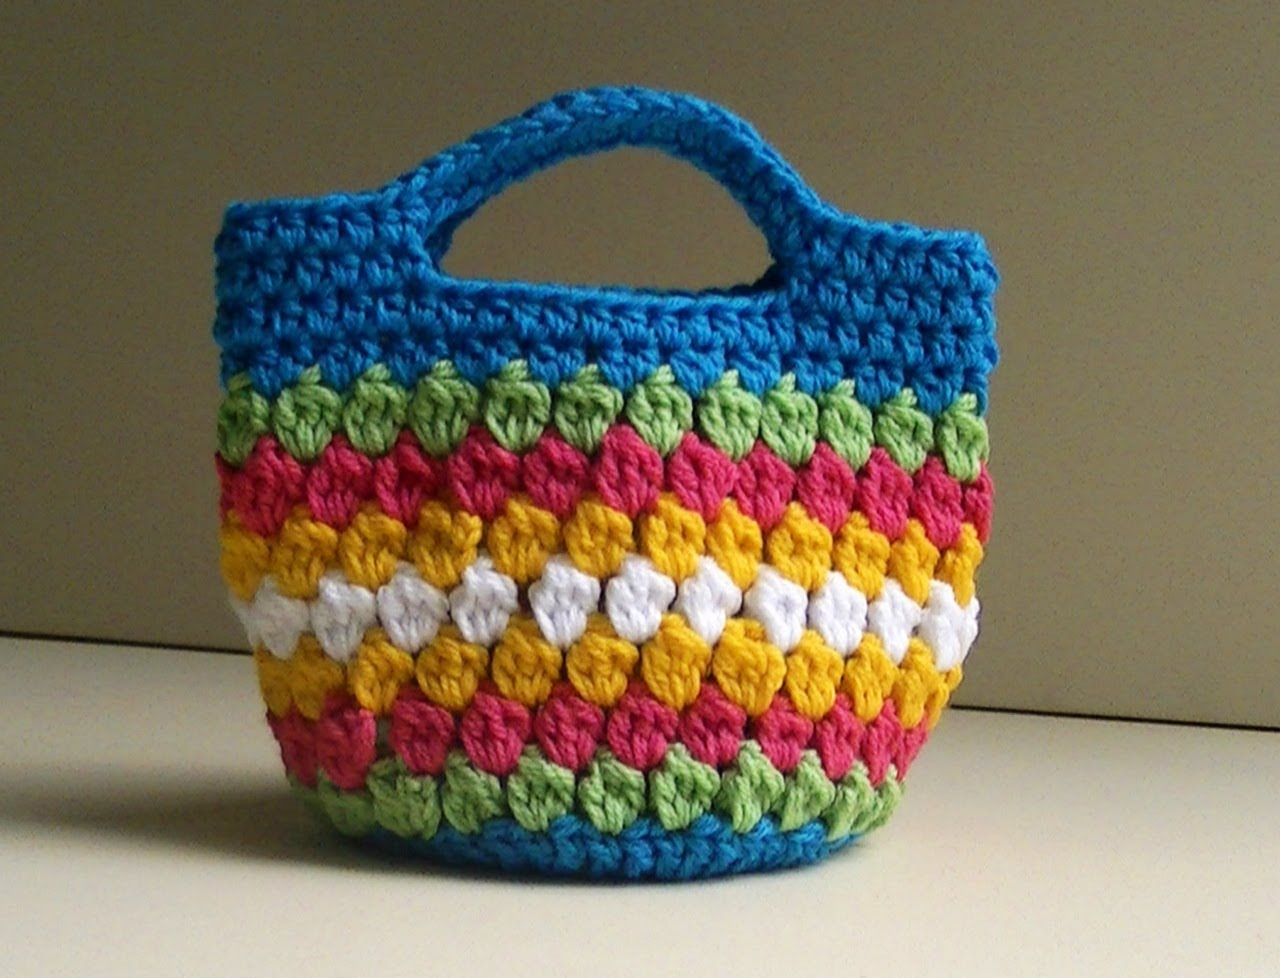 Designer Crochet Bag Patterns Cluster Stitch Bag Crochet Crochet Patterns